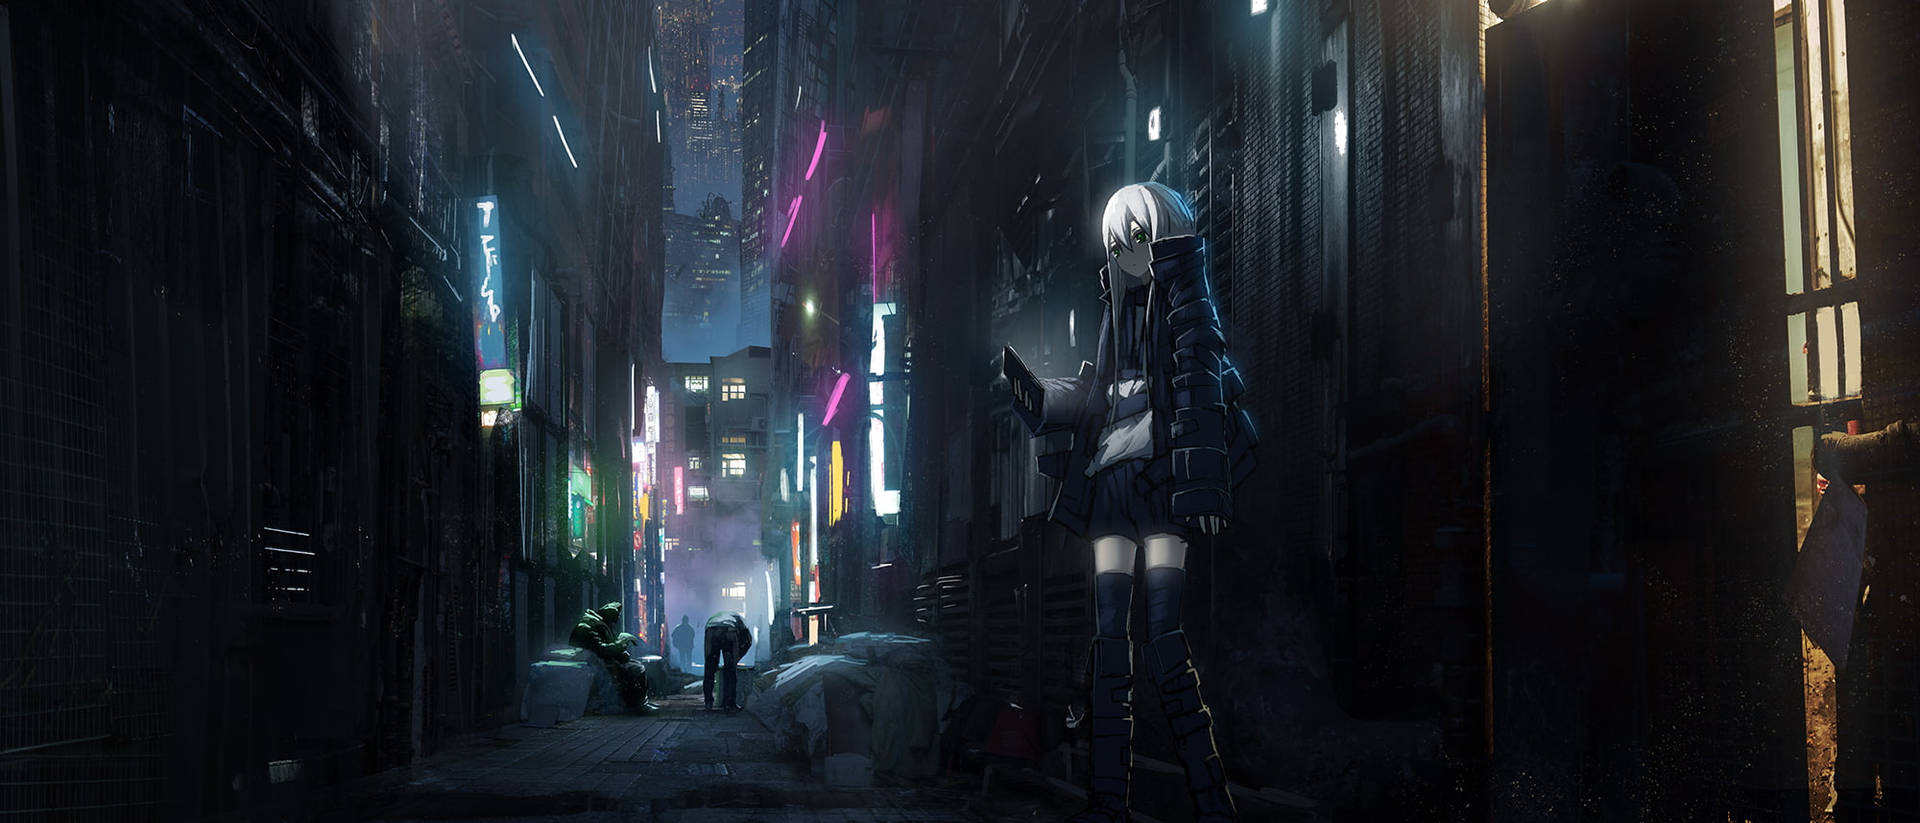 Neon City Dark Anime Aesthetic Desktop Wallpaper